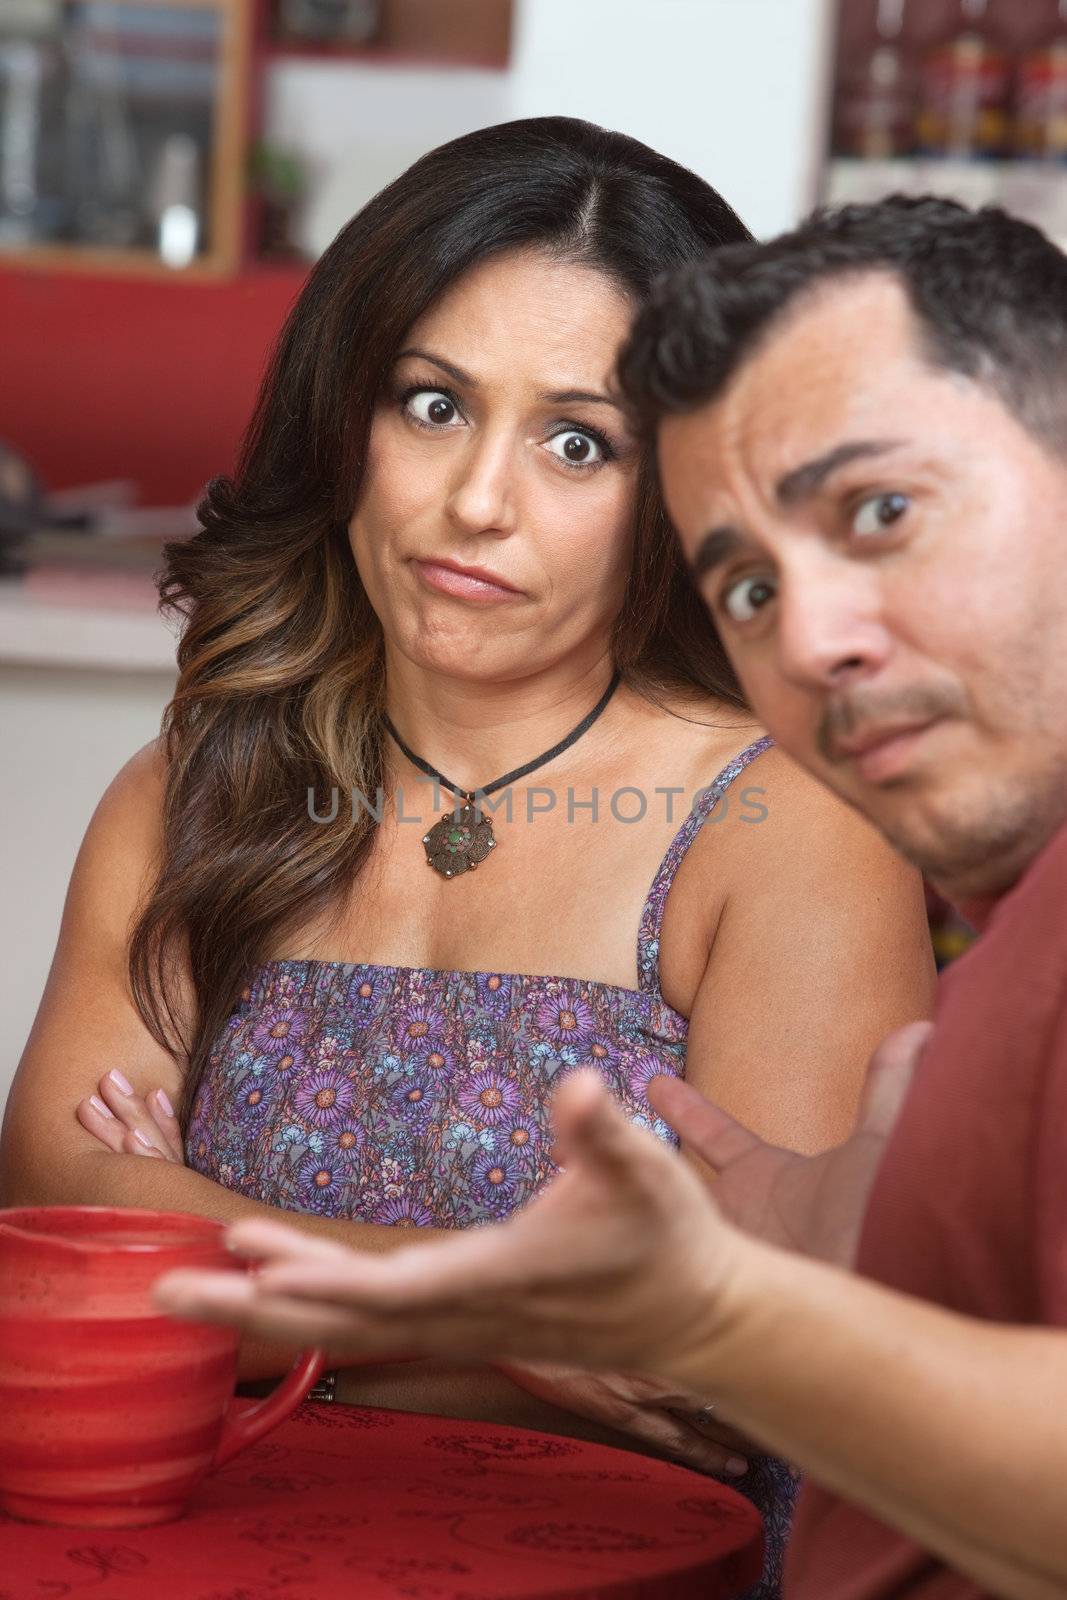 Skeptical Latino woman sitting with man at table